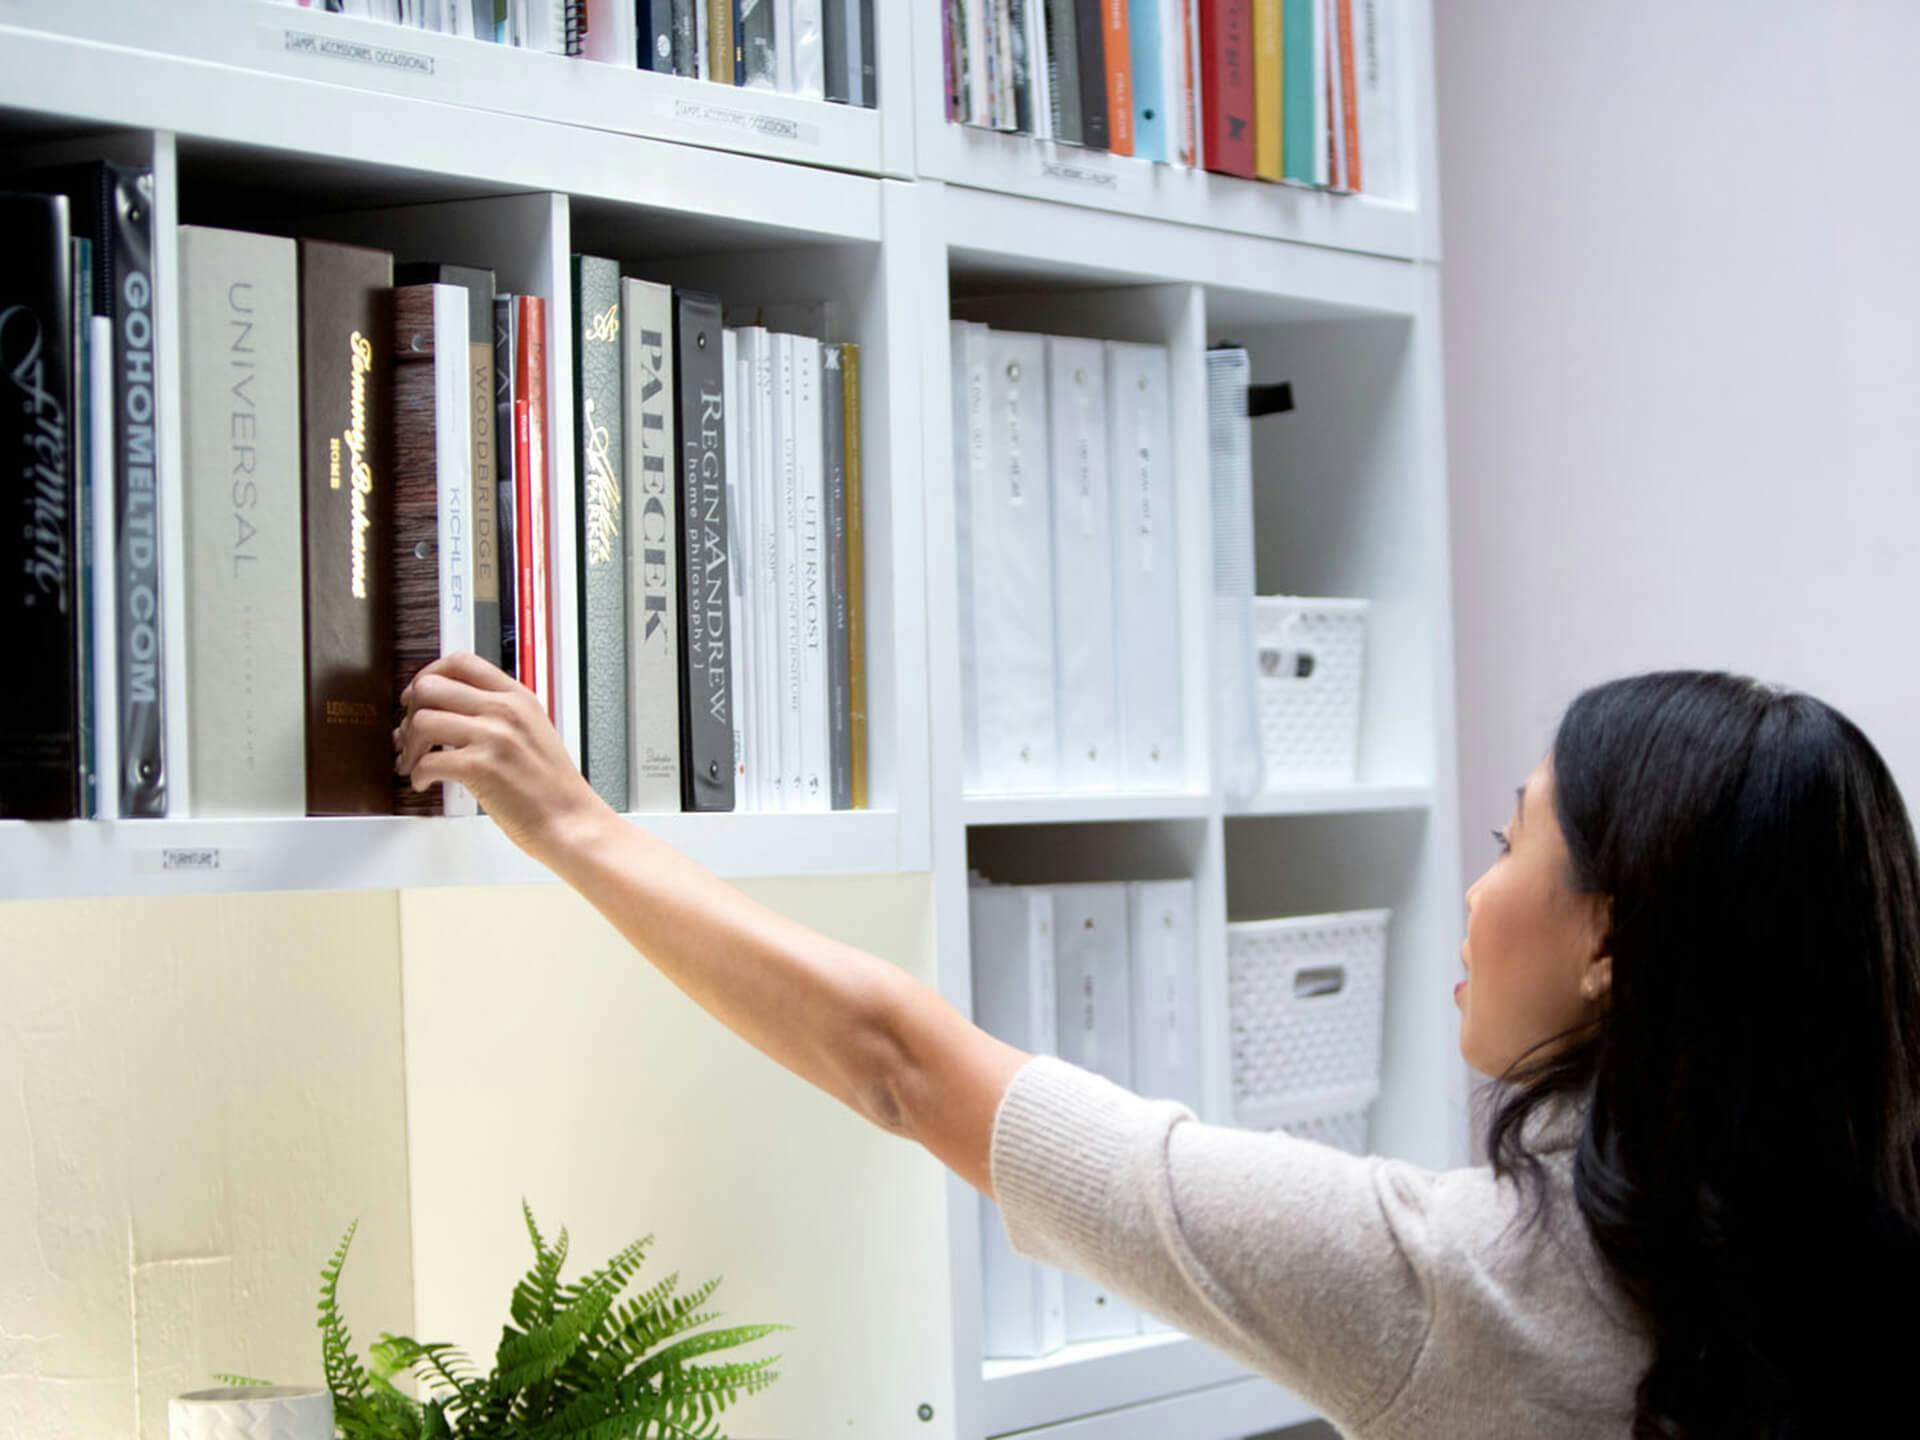 Kichler consultant pulling a book off a shelf